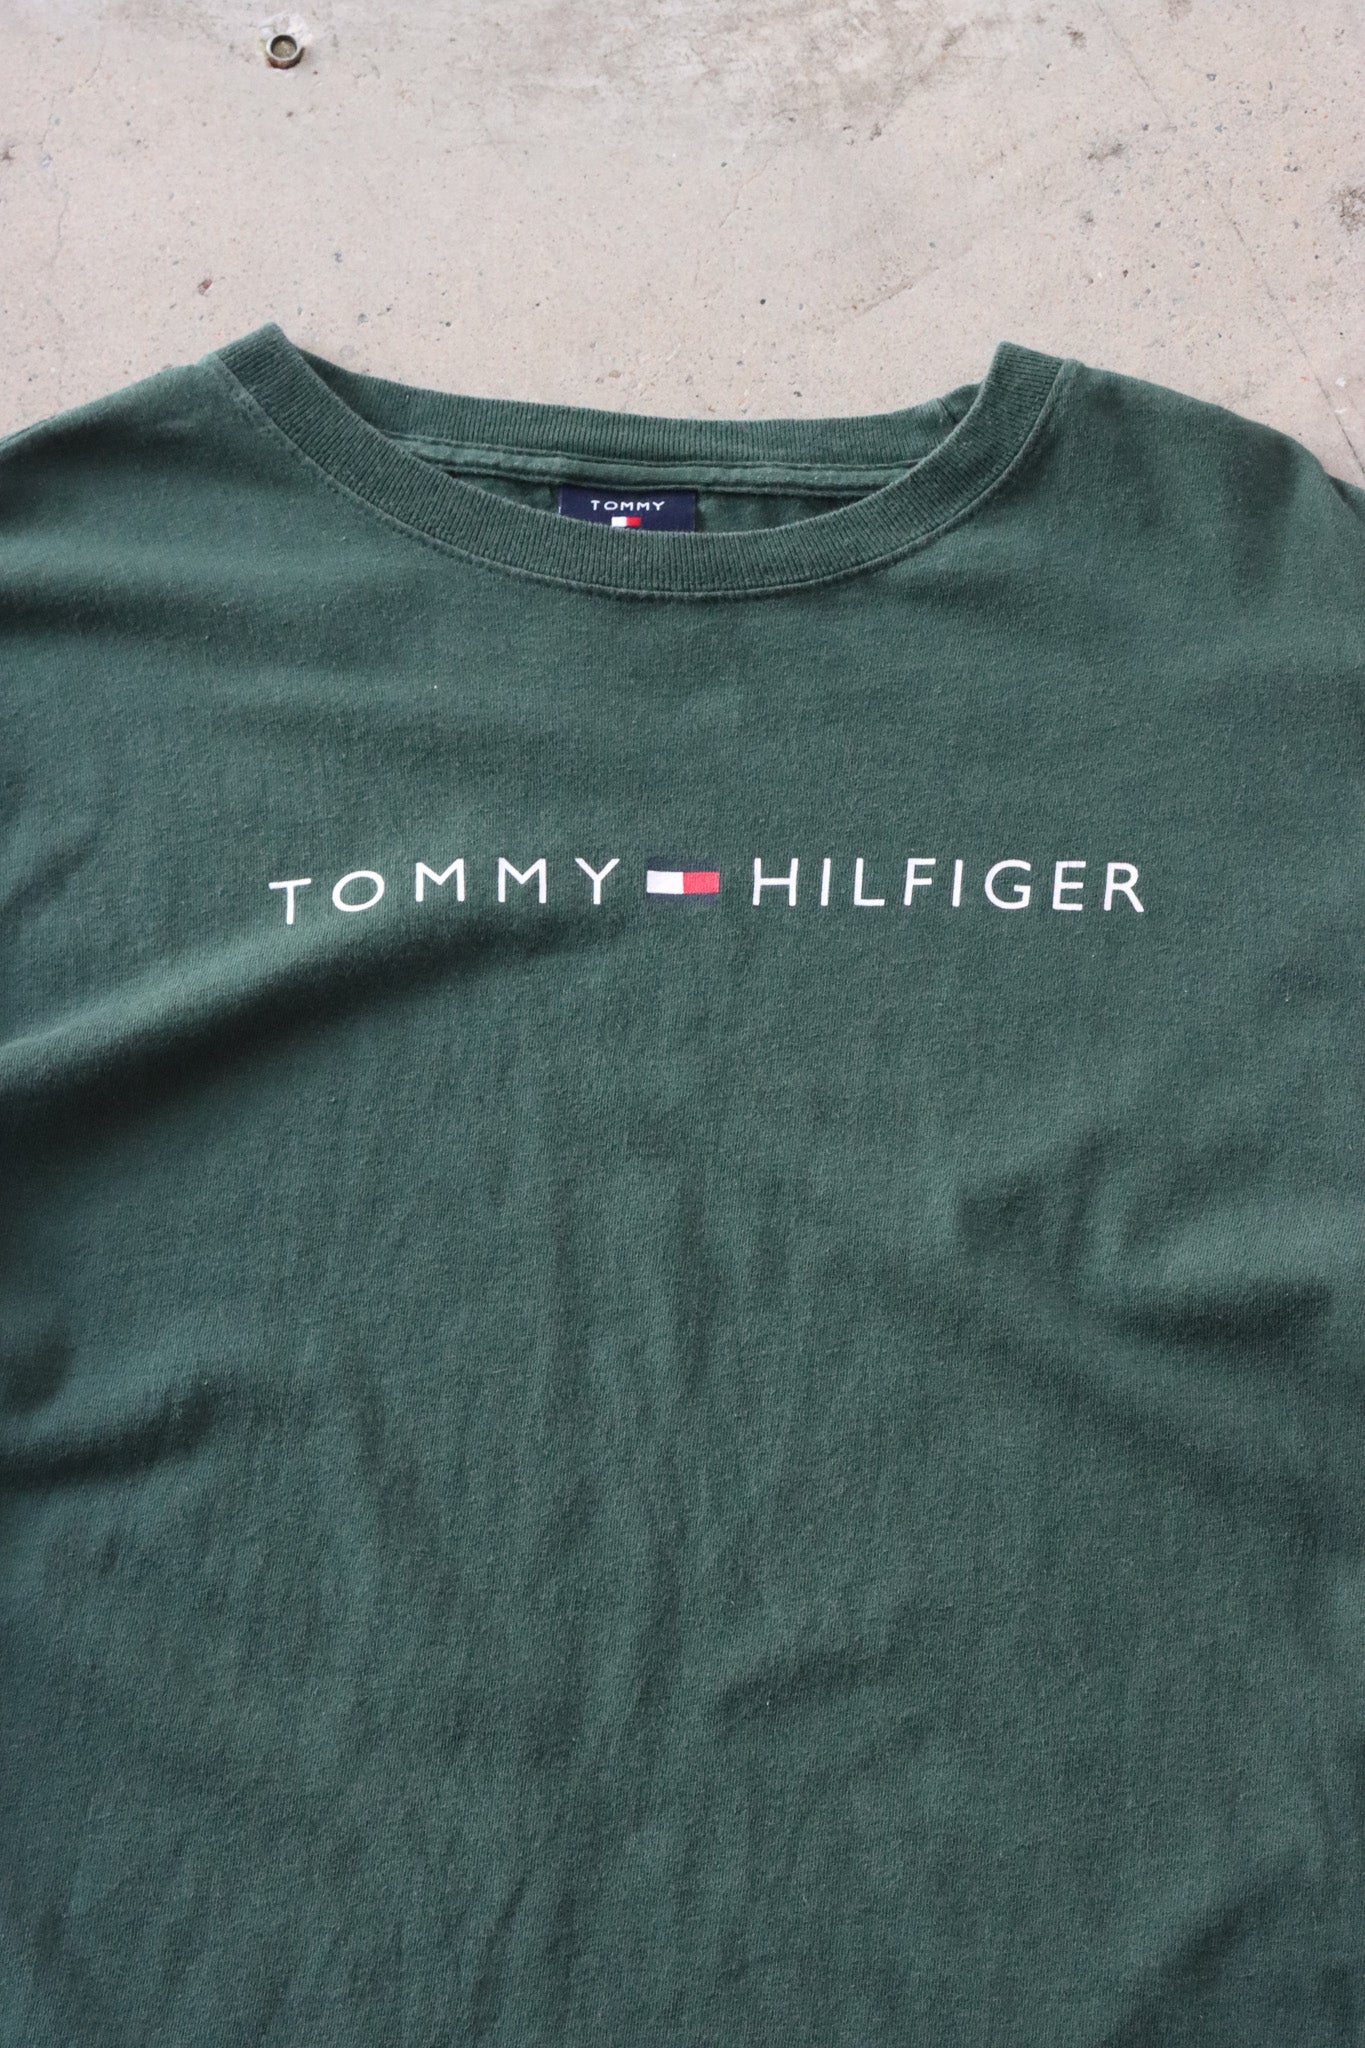 Vintage Tommy Hilfiger Long Sleeve Tee XL